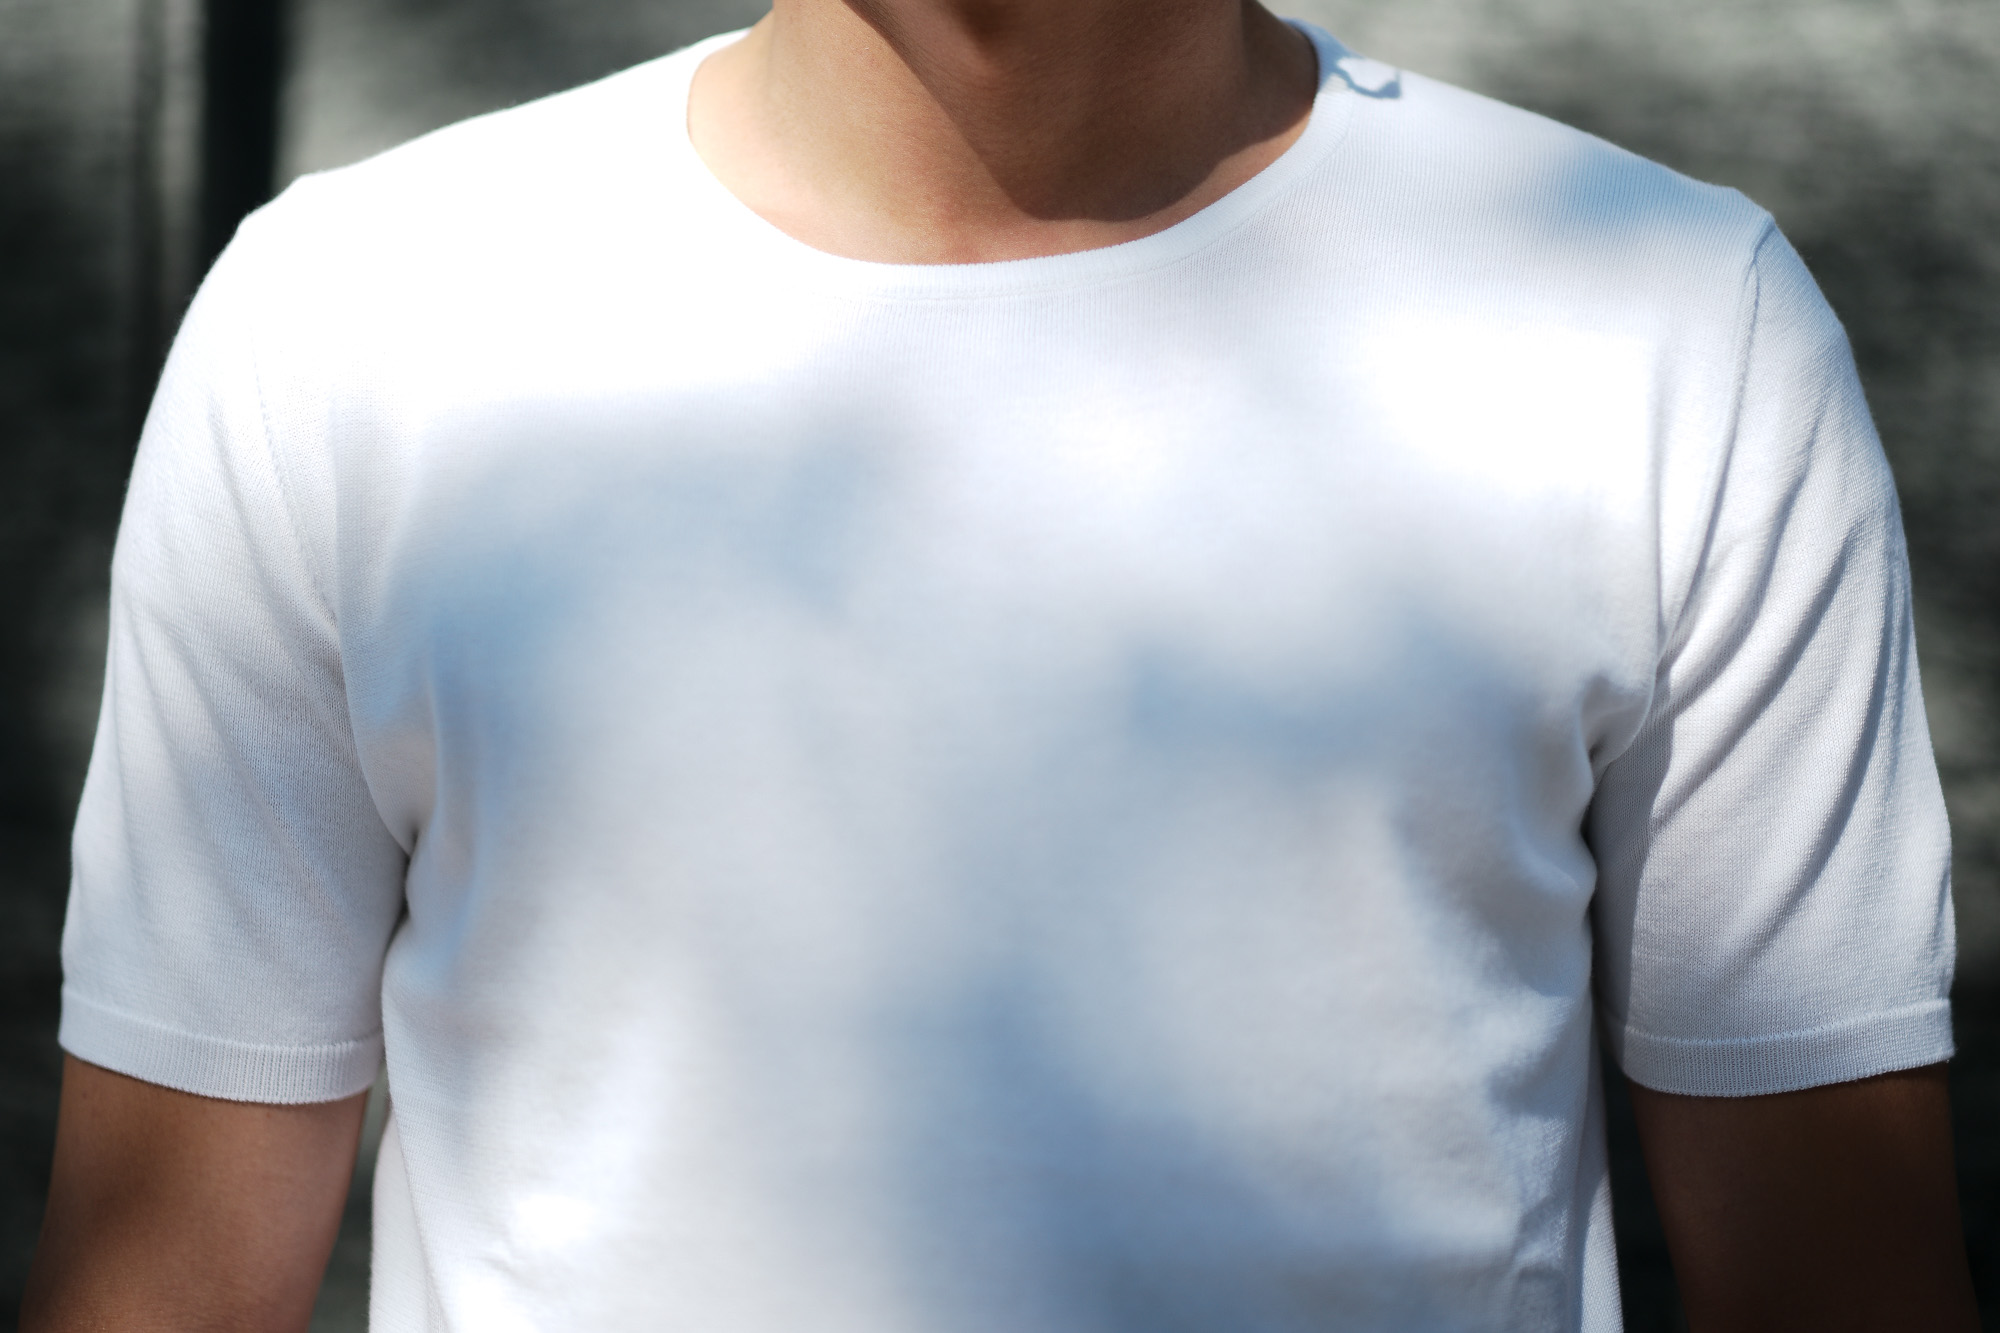 Cruciani (クルチアーニ) Knit T-shirt (ニット Tシャツ) 27ゲージ コットン ニット Tシャツ WHITE (ホワイト・Z0001) made in italy (イタリア製) 2019 春夏新作 愛知 名古屋 altoediritto アルトエデリット